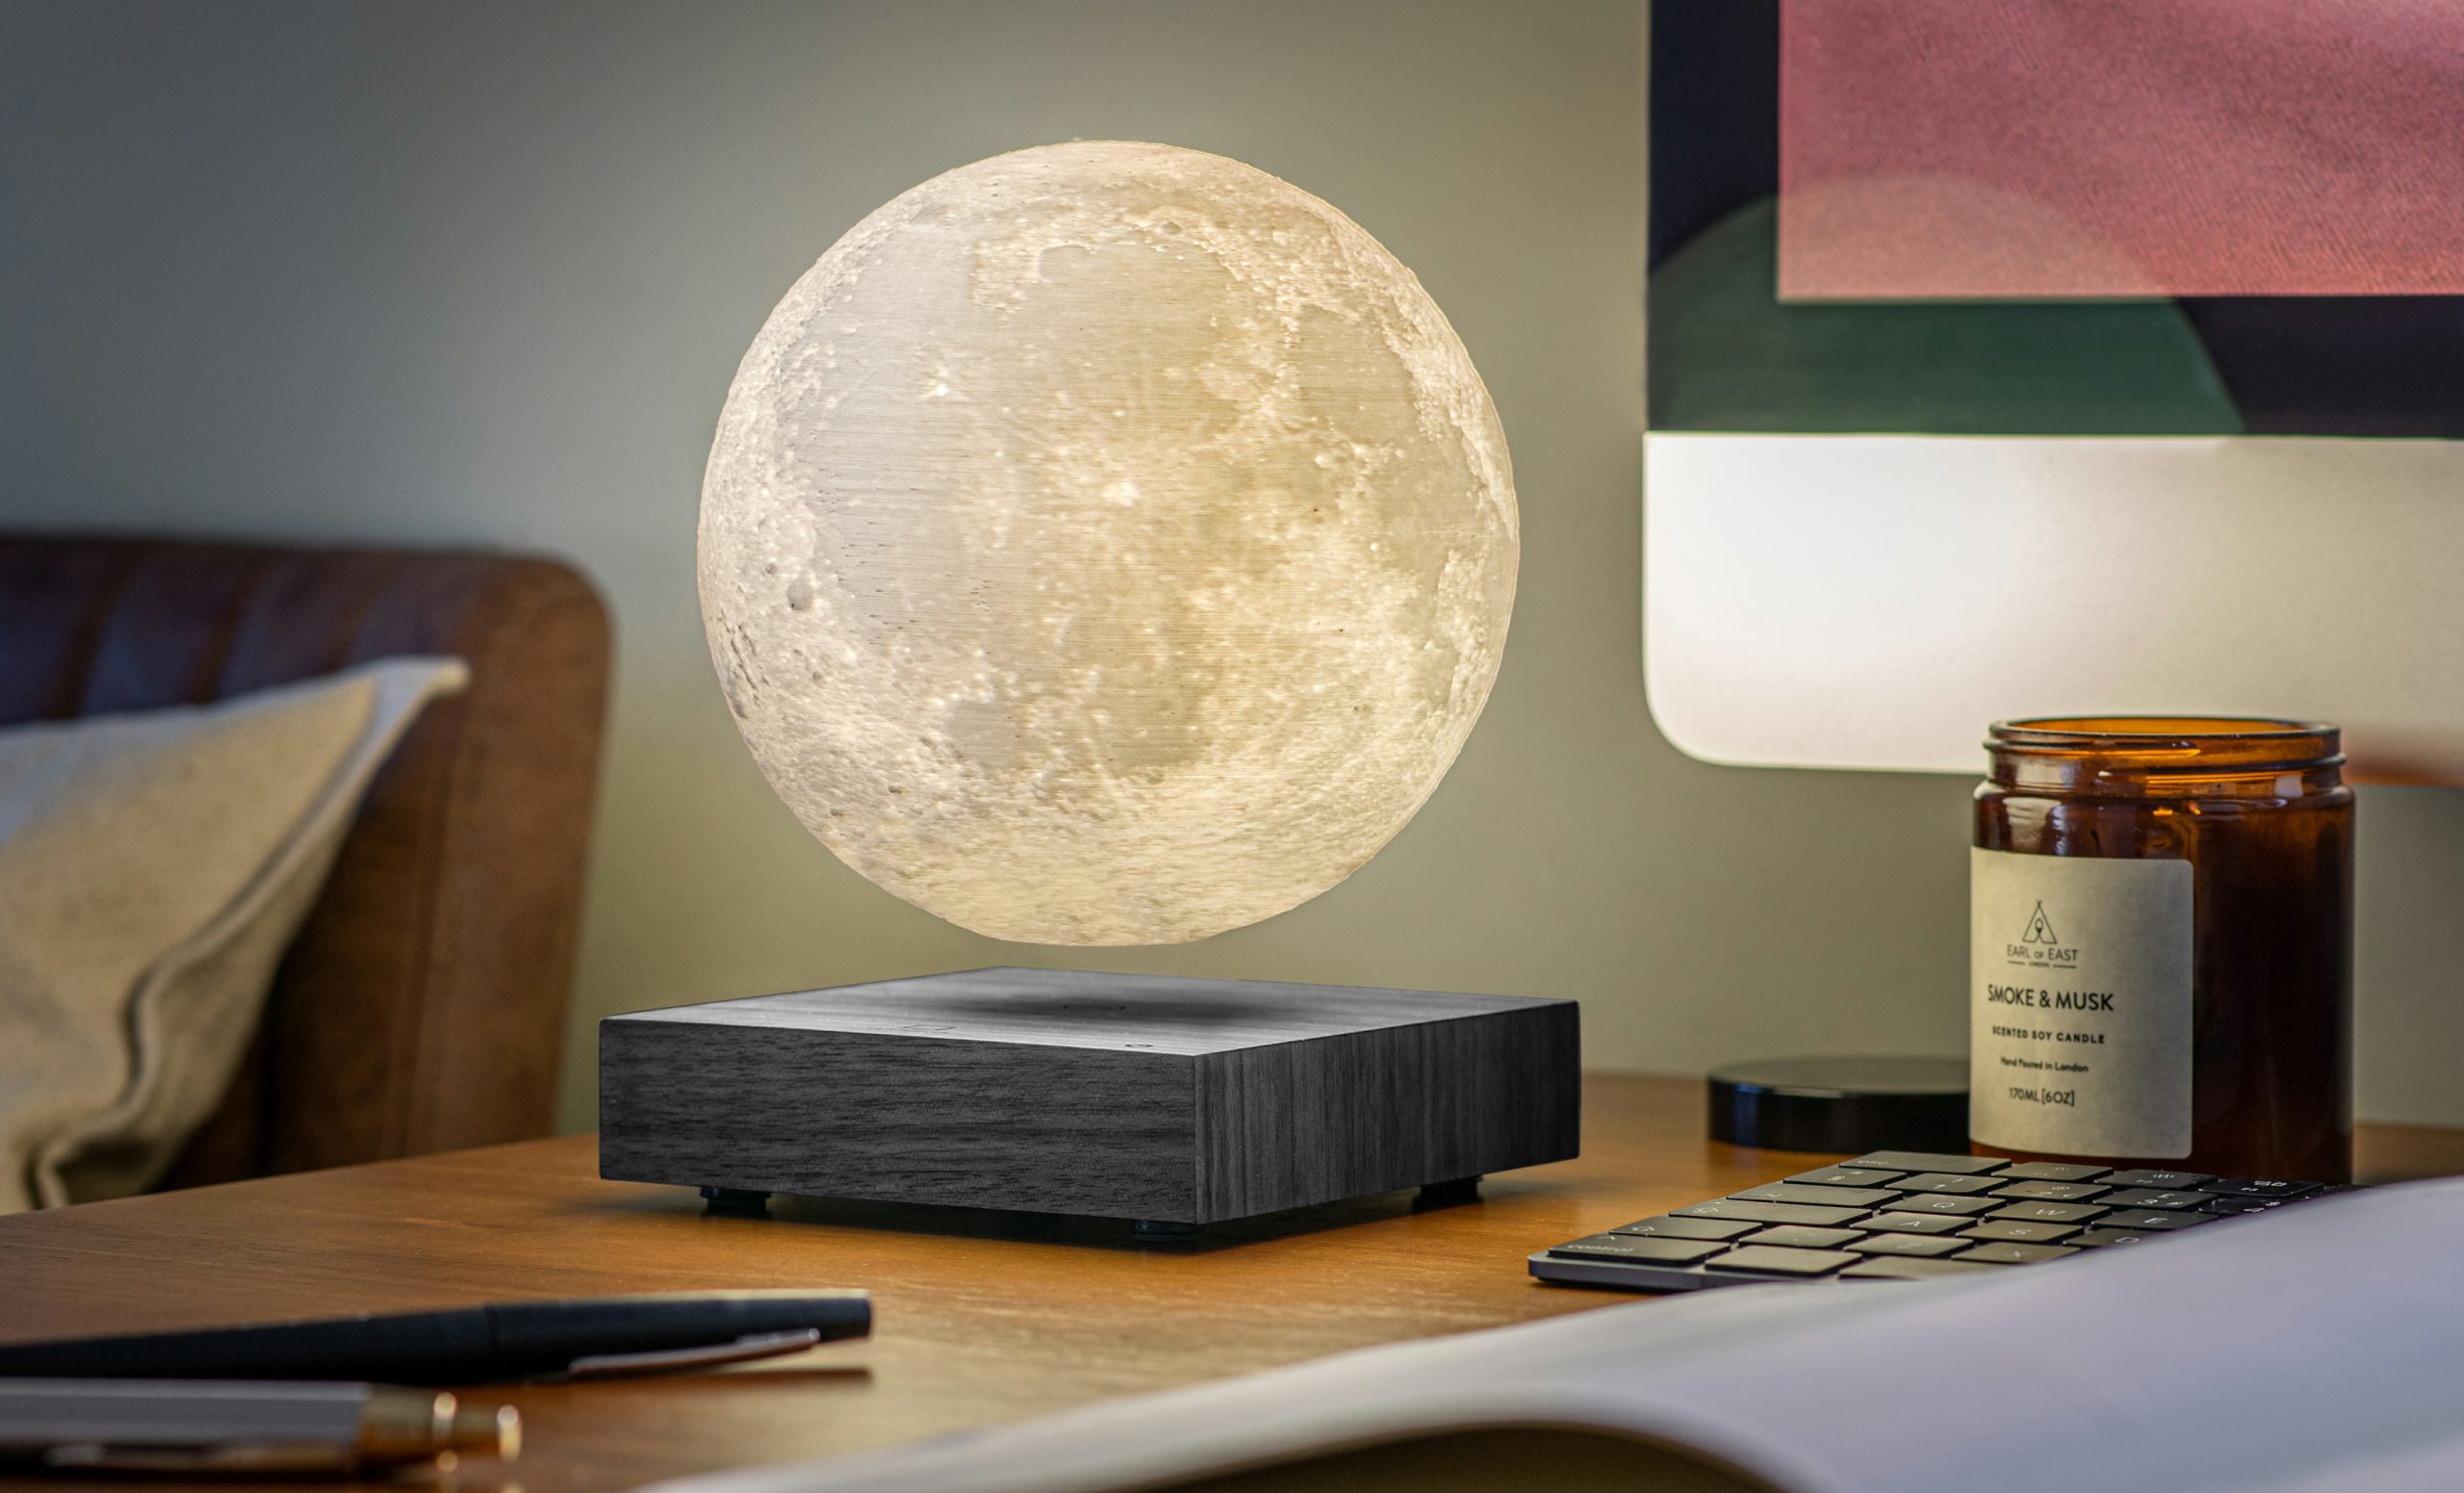 Gingko » Smart Moon Lamp